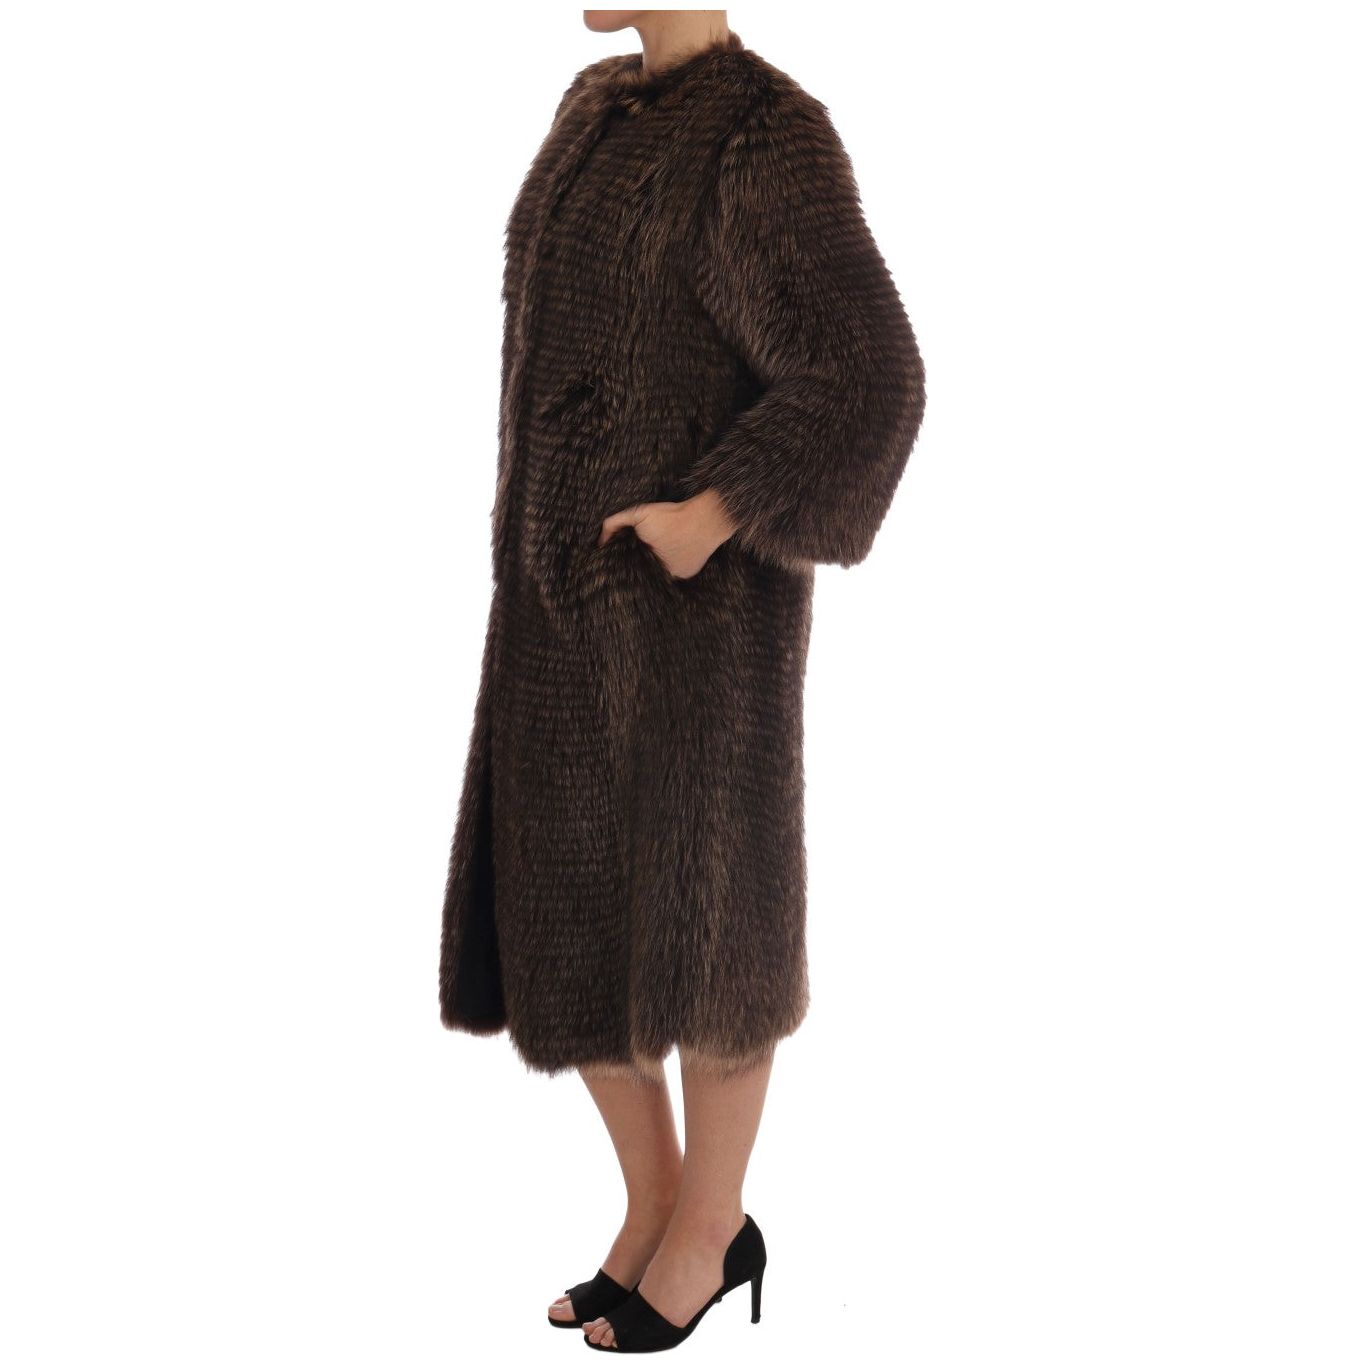 Dolce & Gabbana Elegant Brown Raccoon Fur Knee-Length Coat Coats & Jackets brown-raccoon-fur-coat-jacket 513000-brown-raccoon-fur-coat-jacket-1.jpg